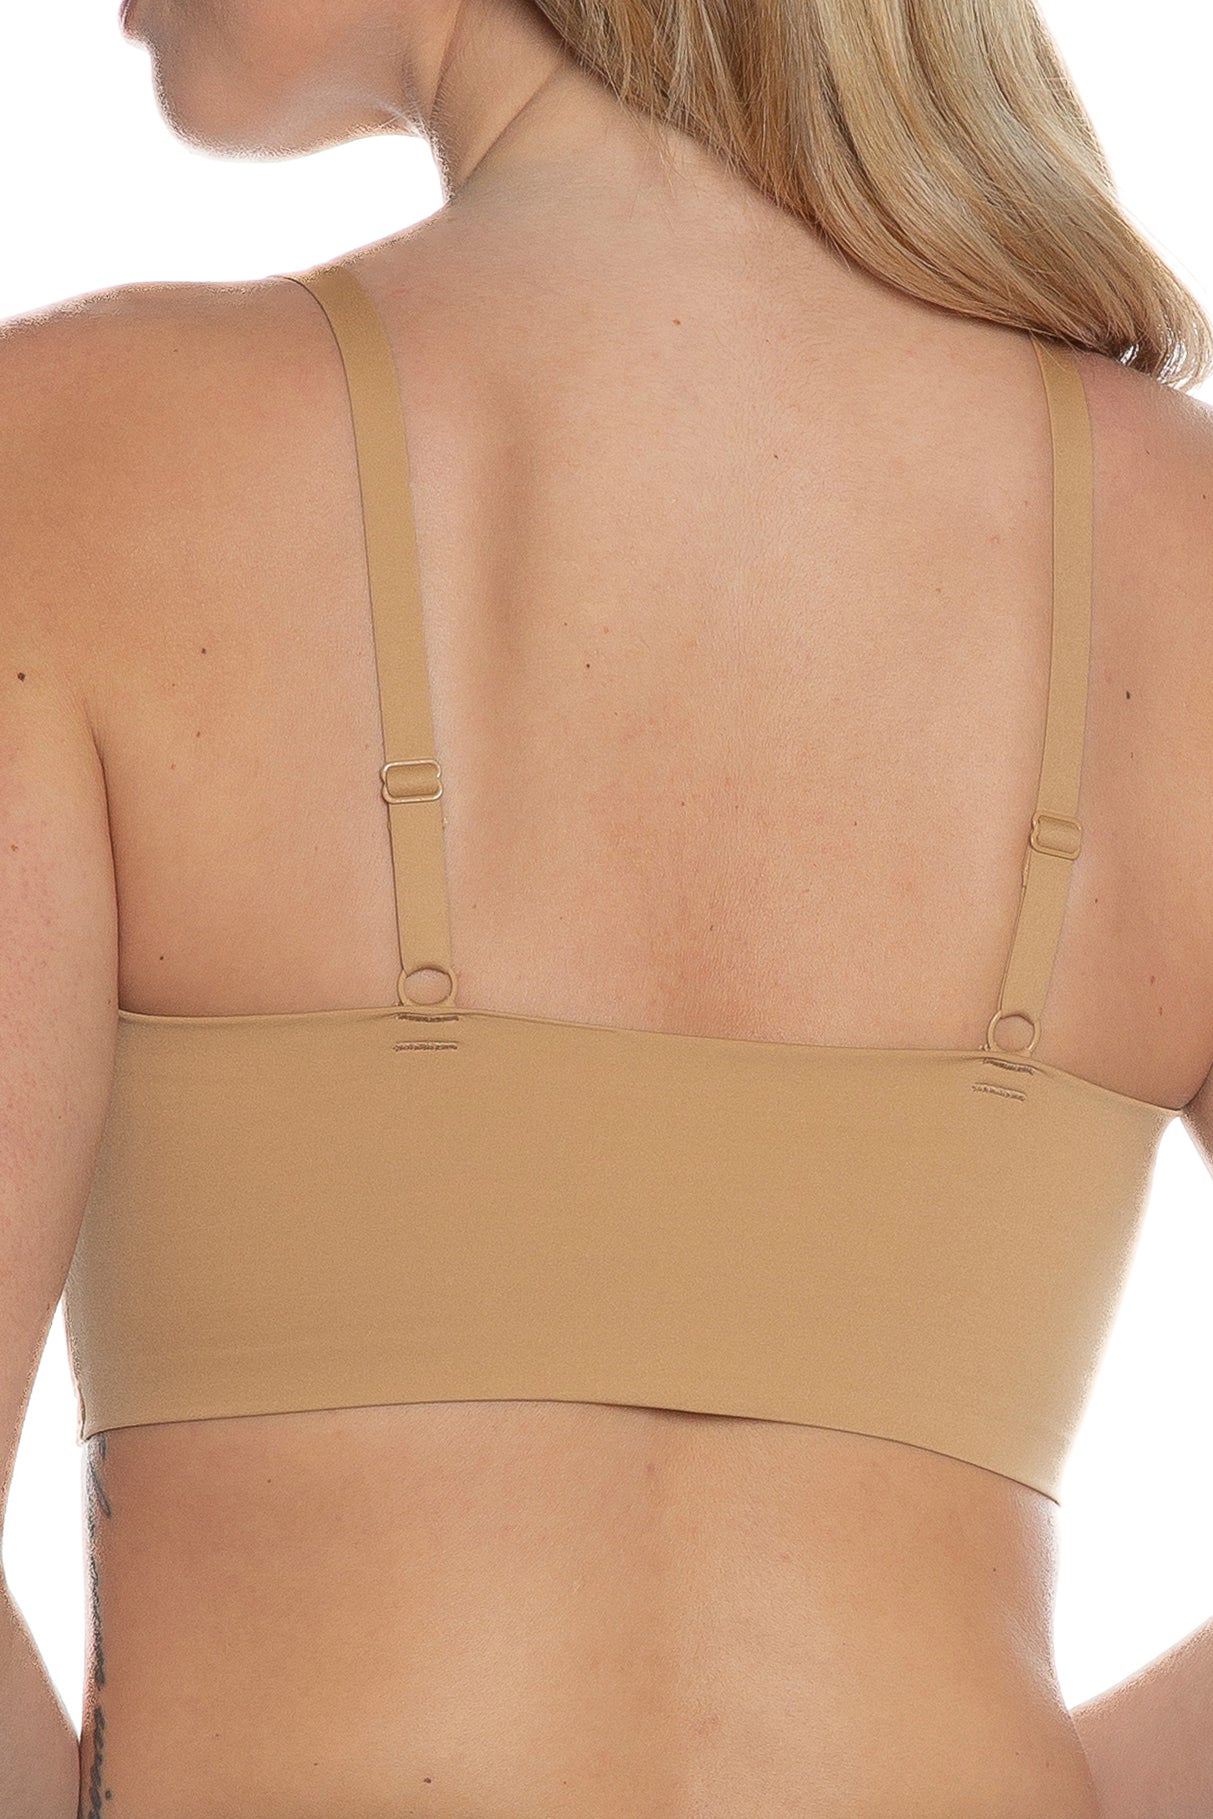 Women's Rhonda Shear 1699 Gel Wireless Bra with No Back Closure (Suntan XL)